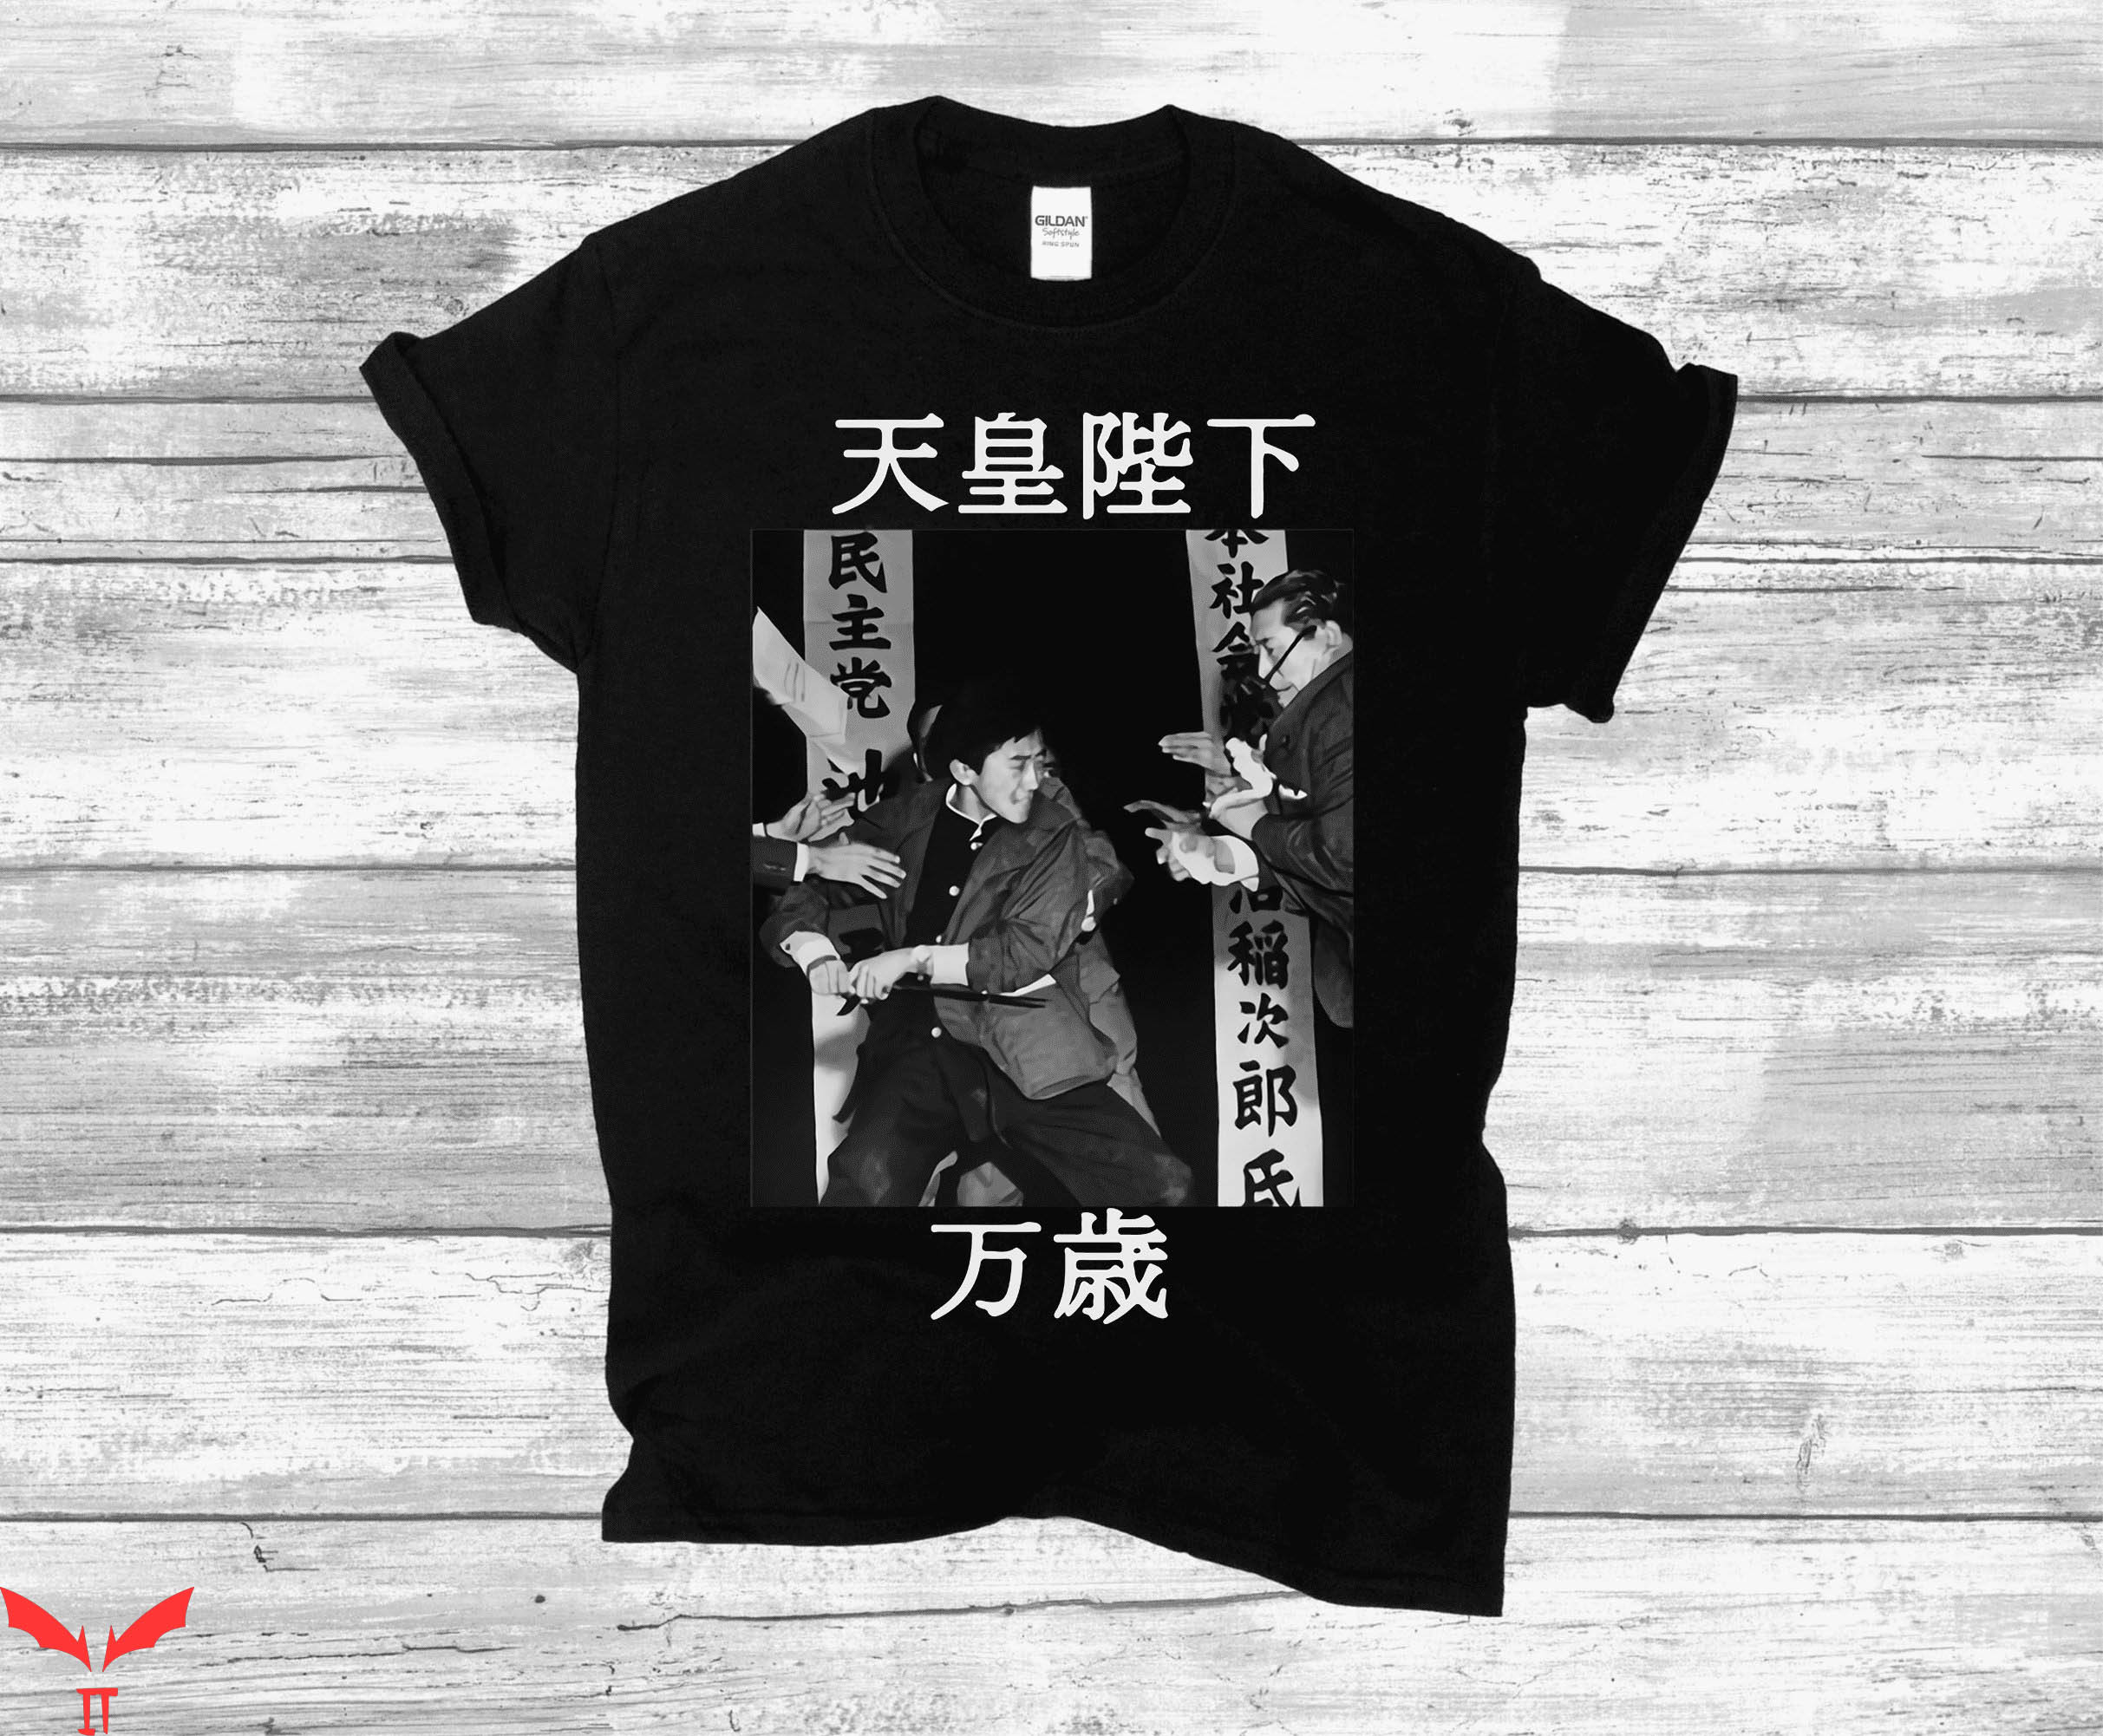 Otoya Yamaguchi T-Shirt Japanese Ultranationalist Tee Shirt